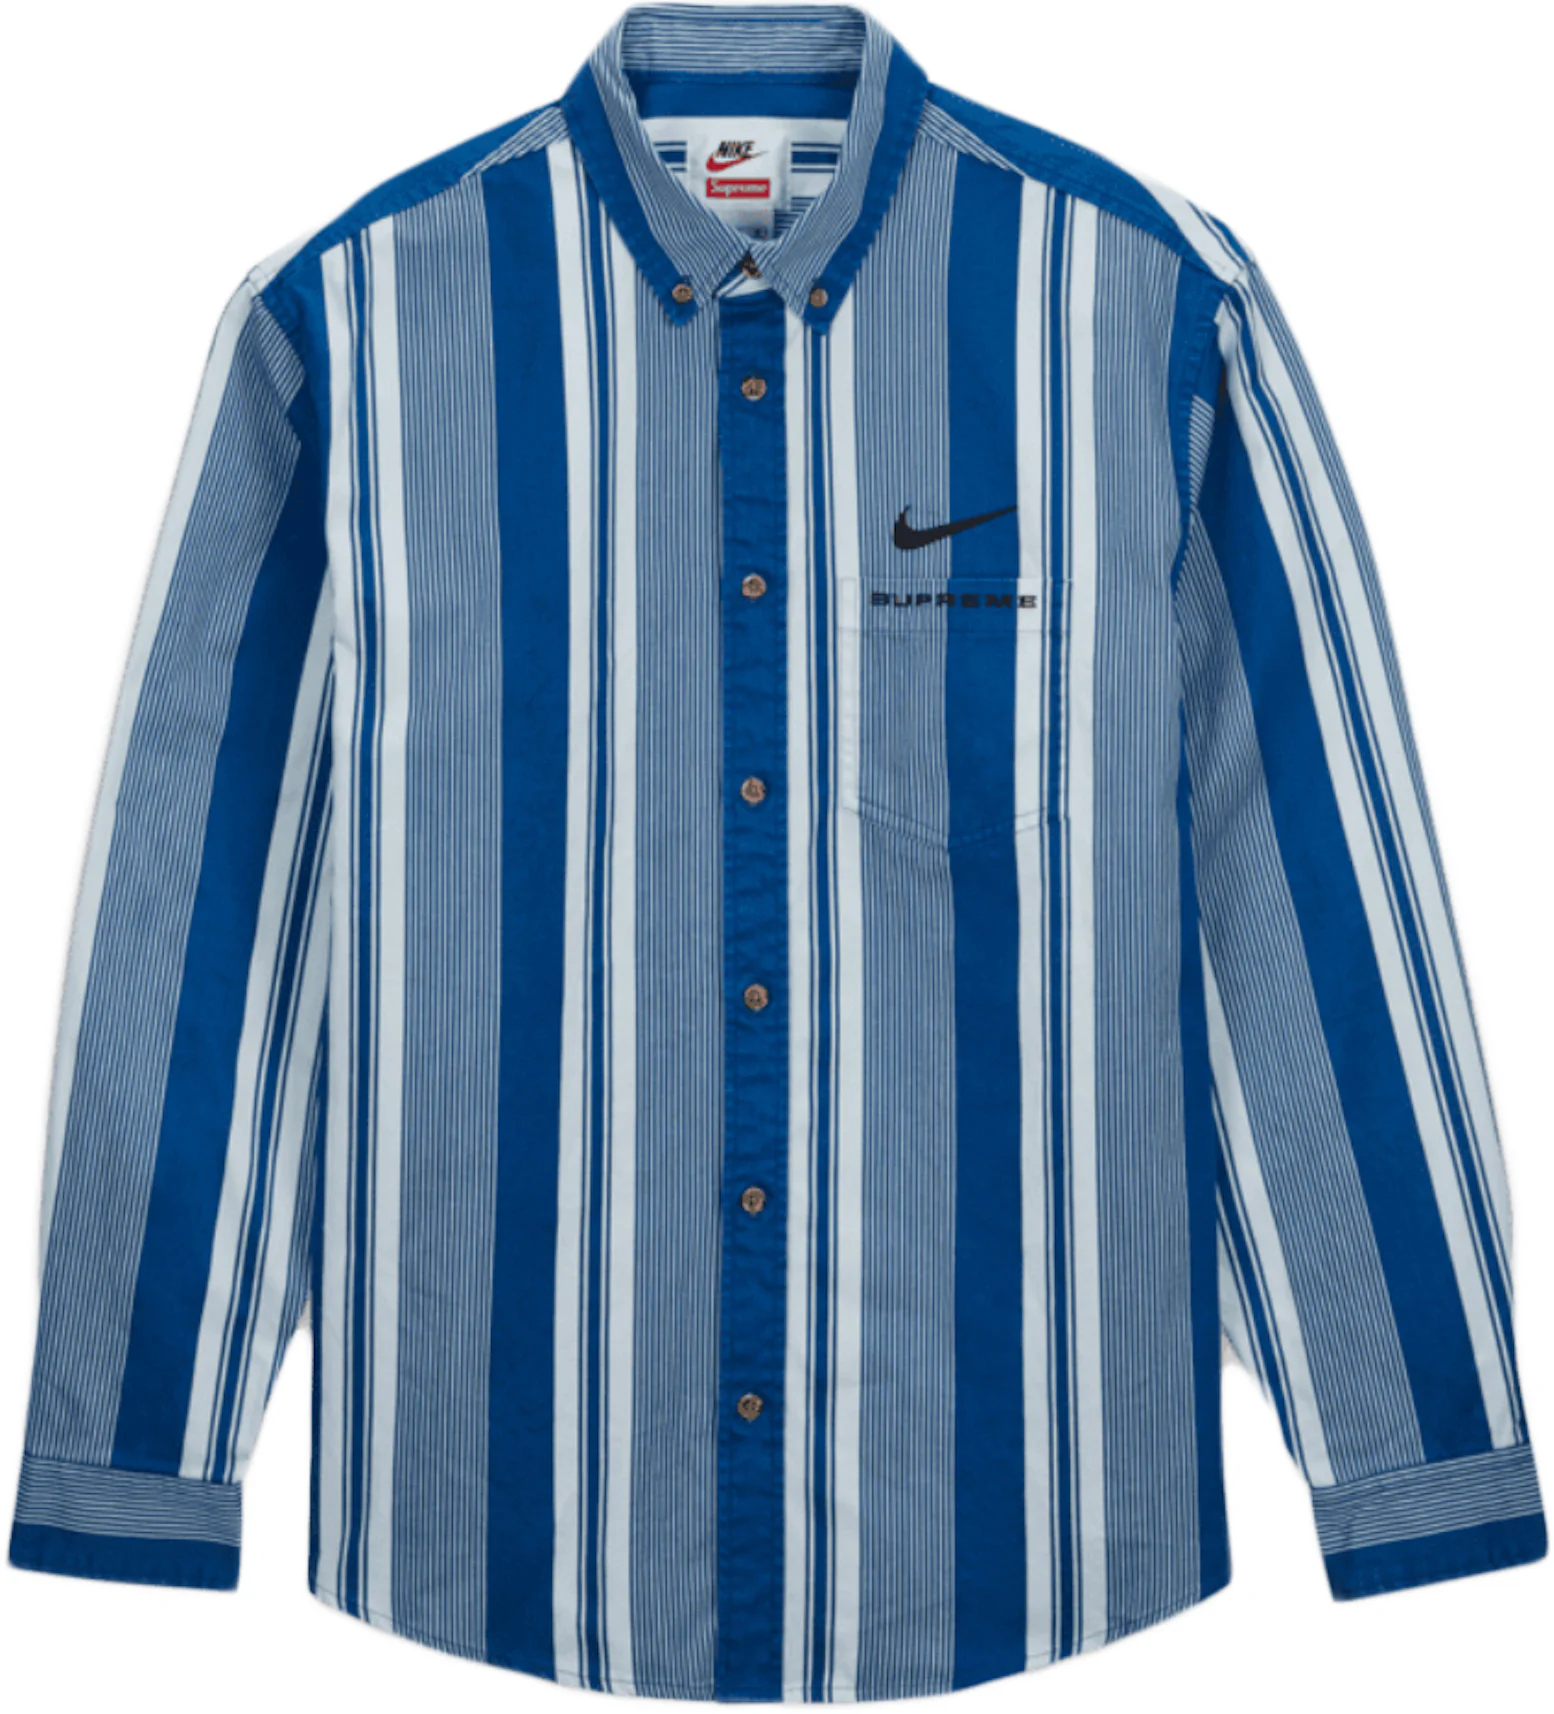 Supreme / Nike® Cotton Twill Shirt Blueトップス